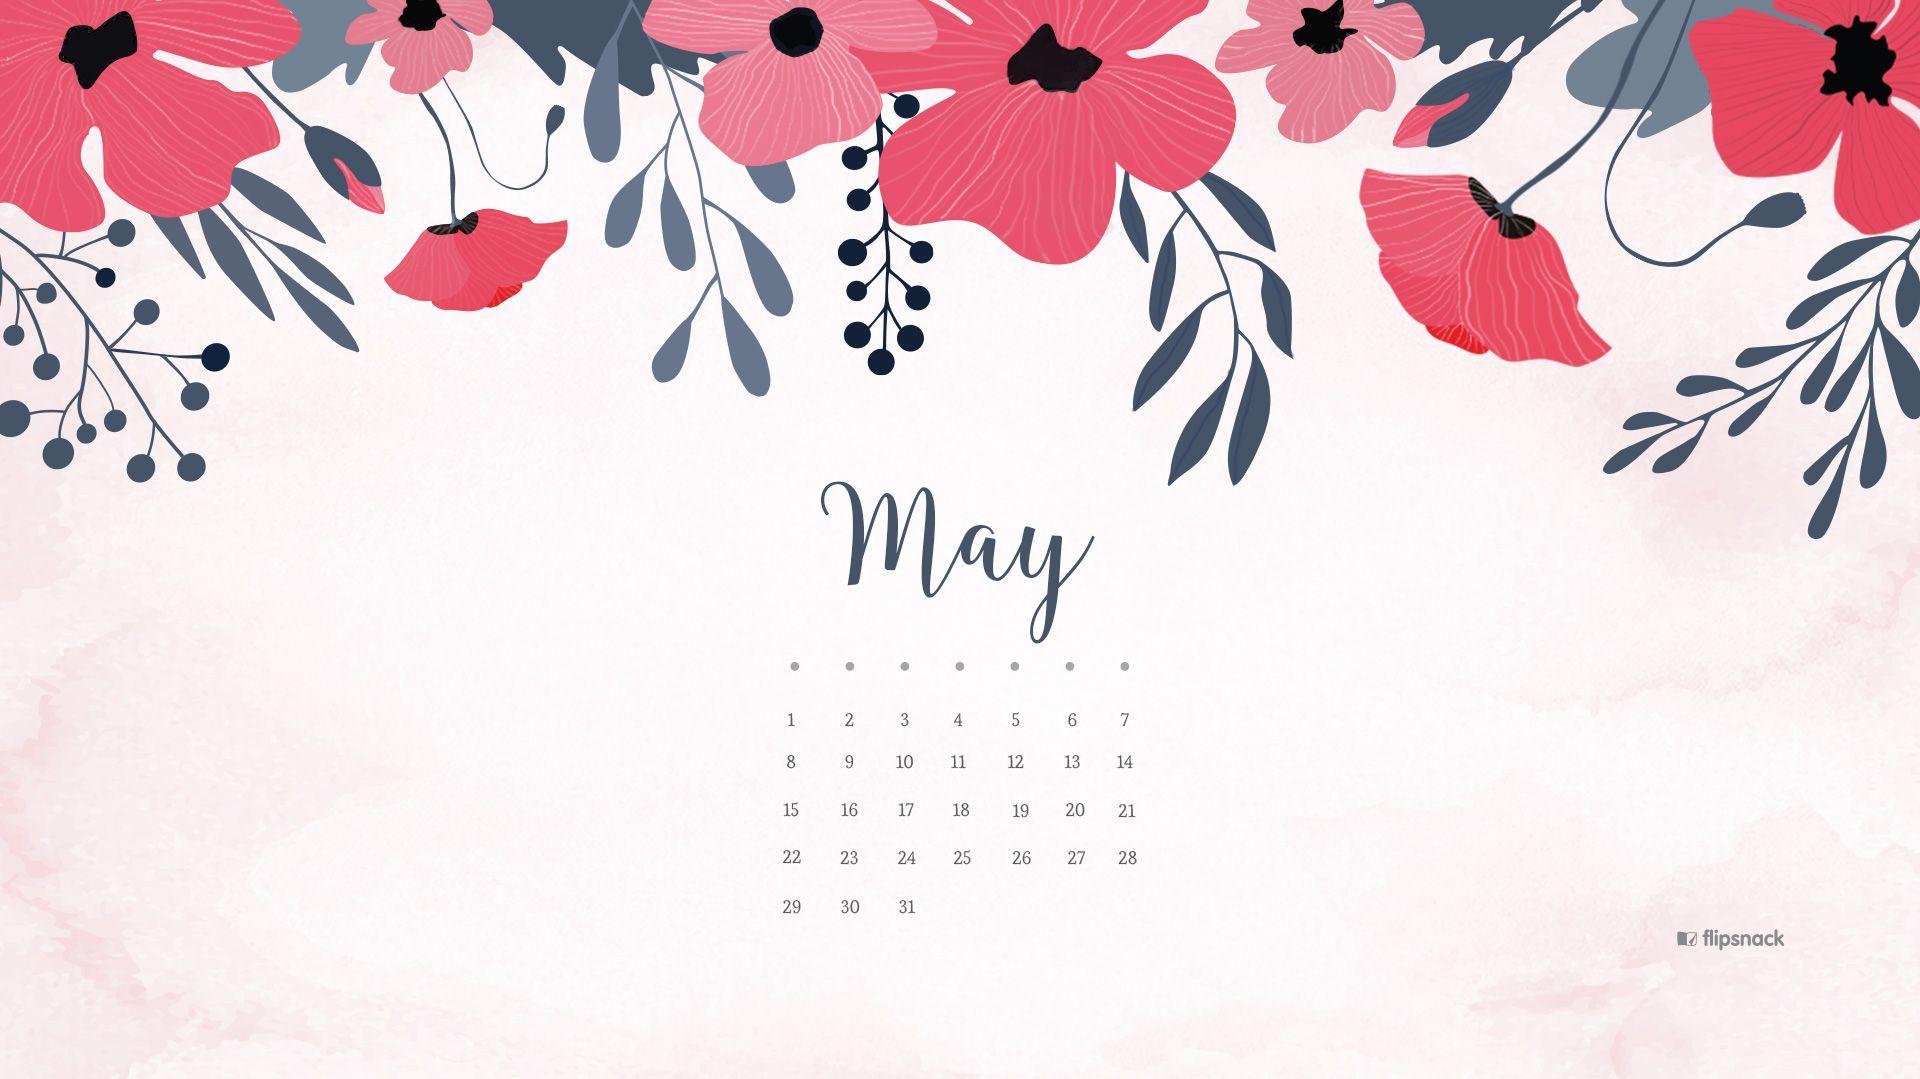 Download Free Calendar Wallpaper Gallery